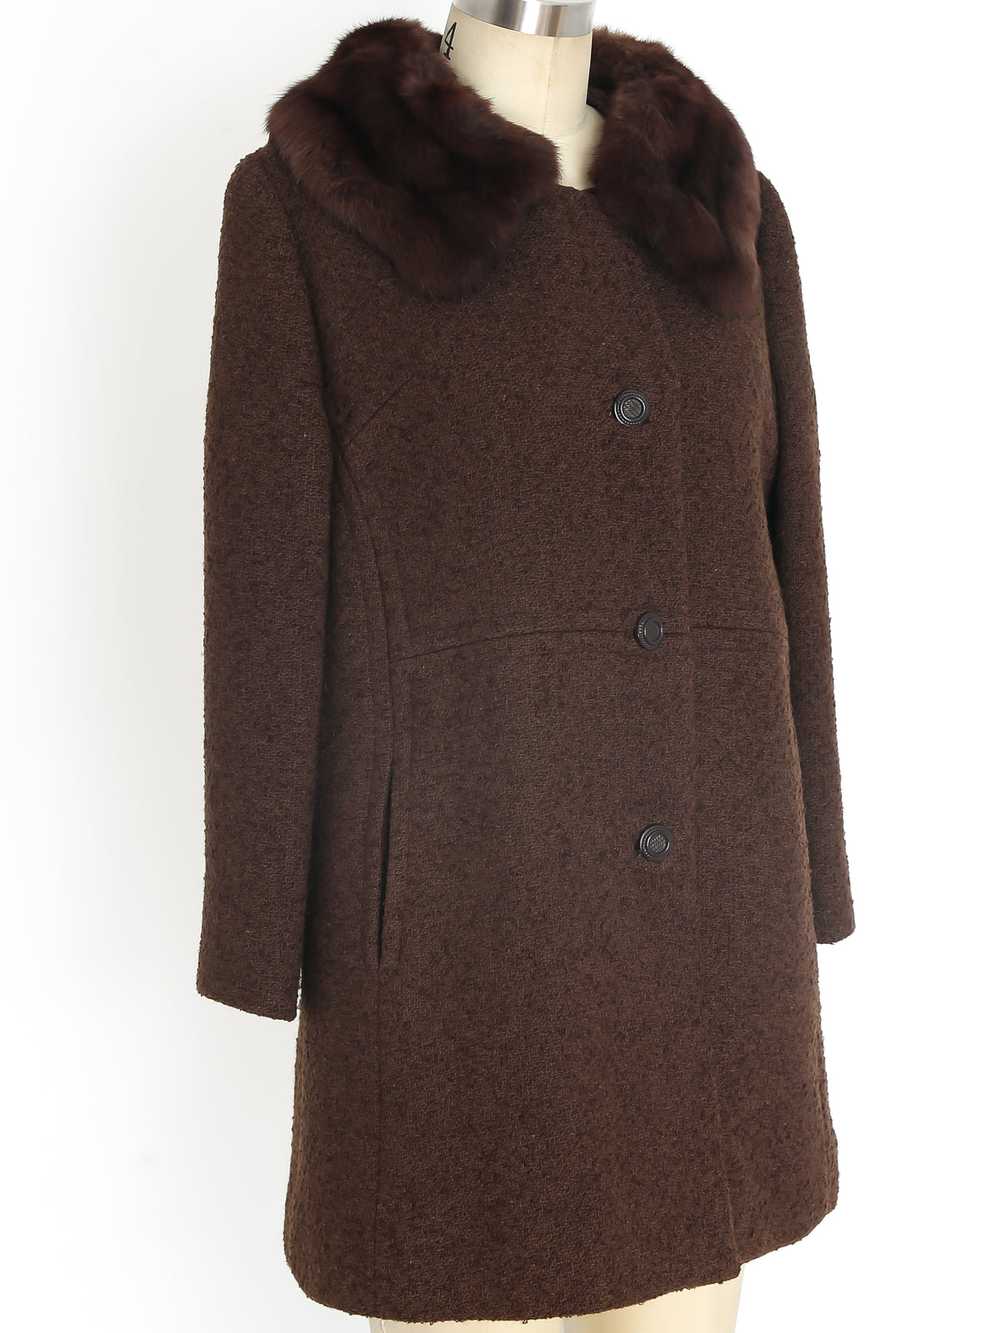 1960's Tweed Jacket with Fur Collar - image 5